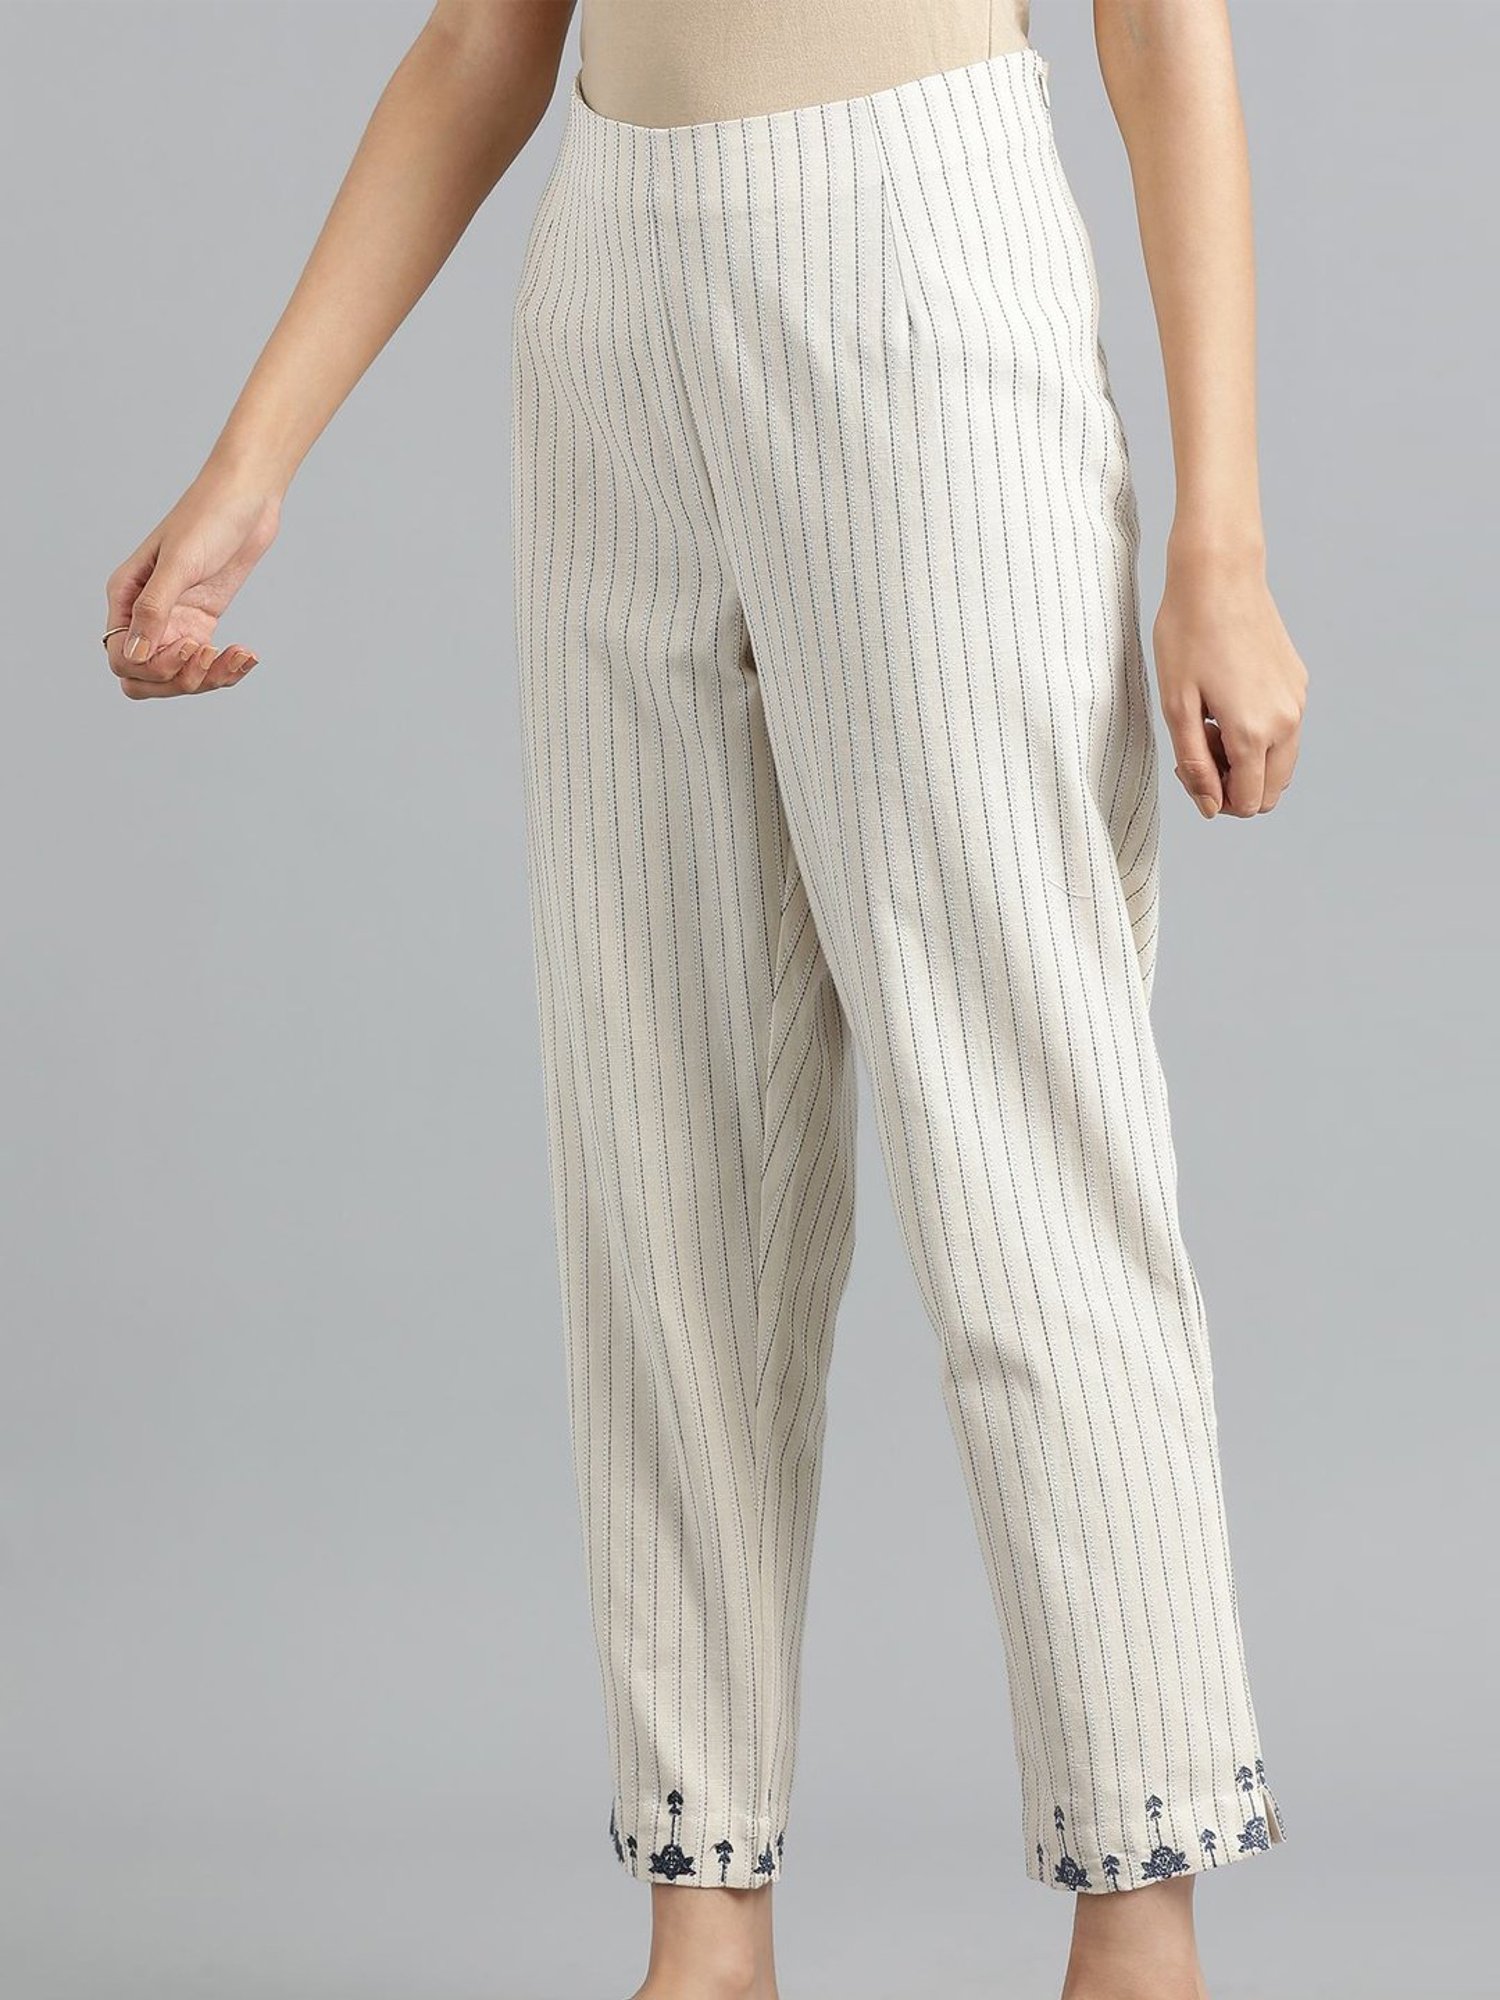 bralette top in cotton stripes  beach stripe bra top and pant set  Mati